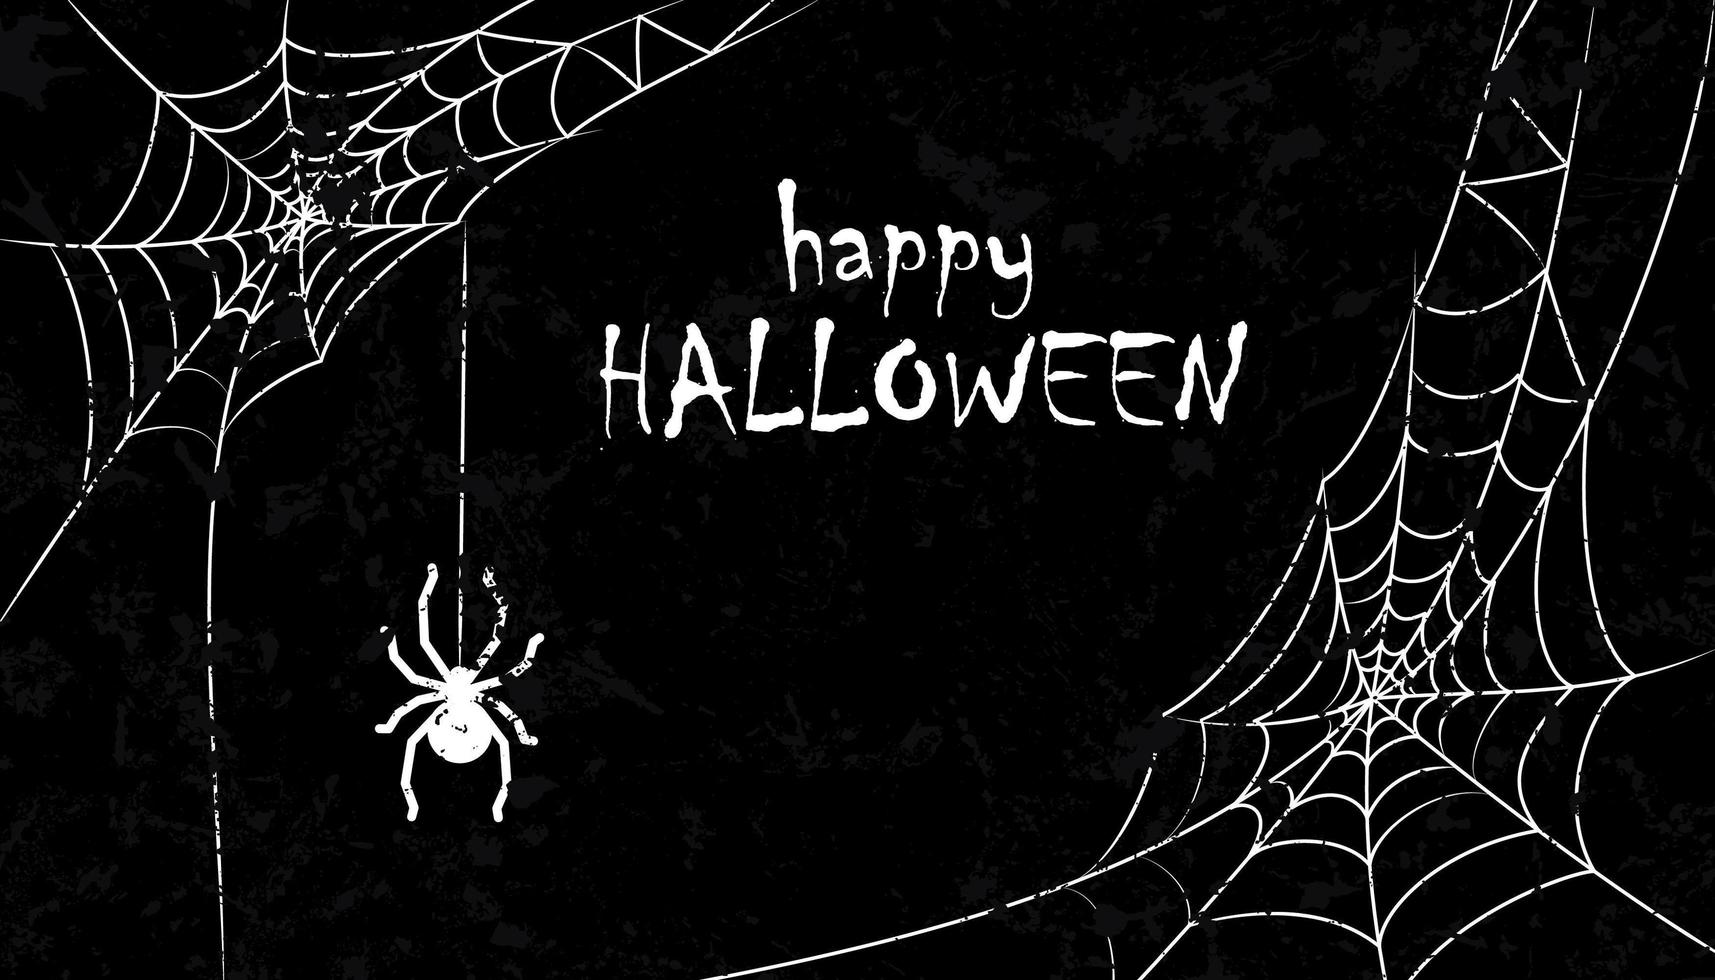 Halloweengrunge design with spooky spider and webs vector